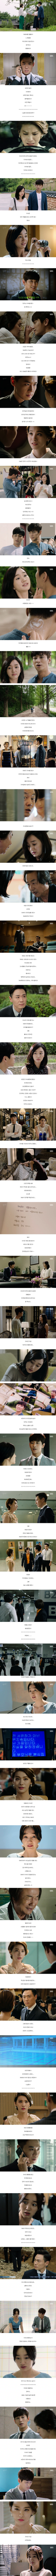 episode 14 captures for the Korean drama 'Mask'